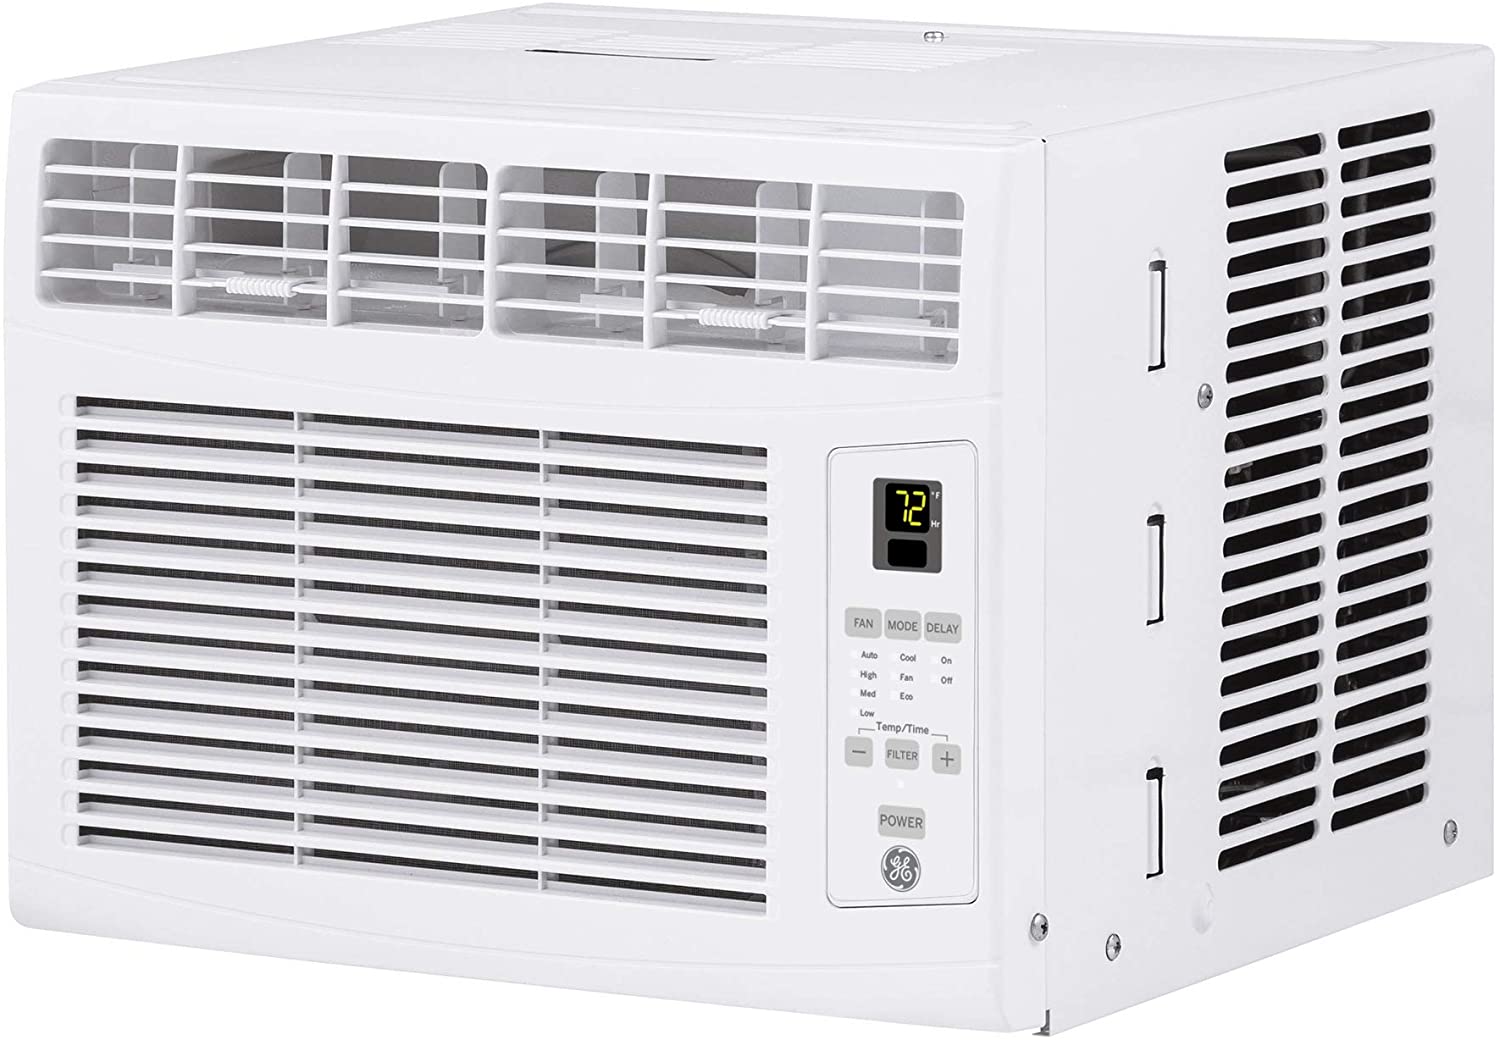 GE 6,000 BTU Electronic Window Air Conditioner Specs,